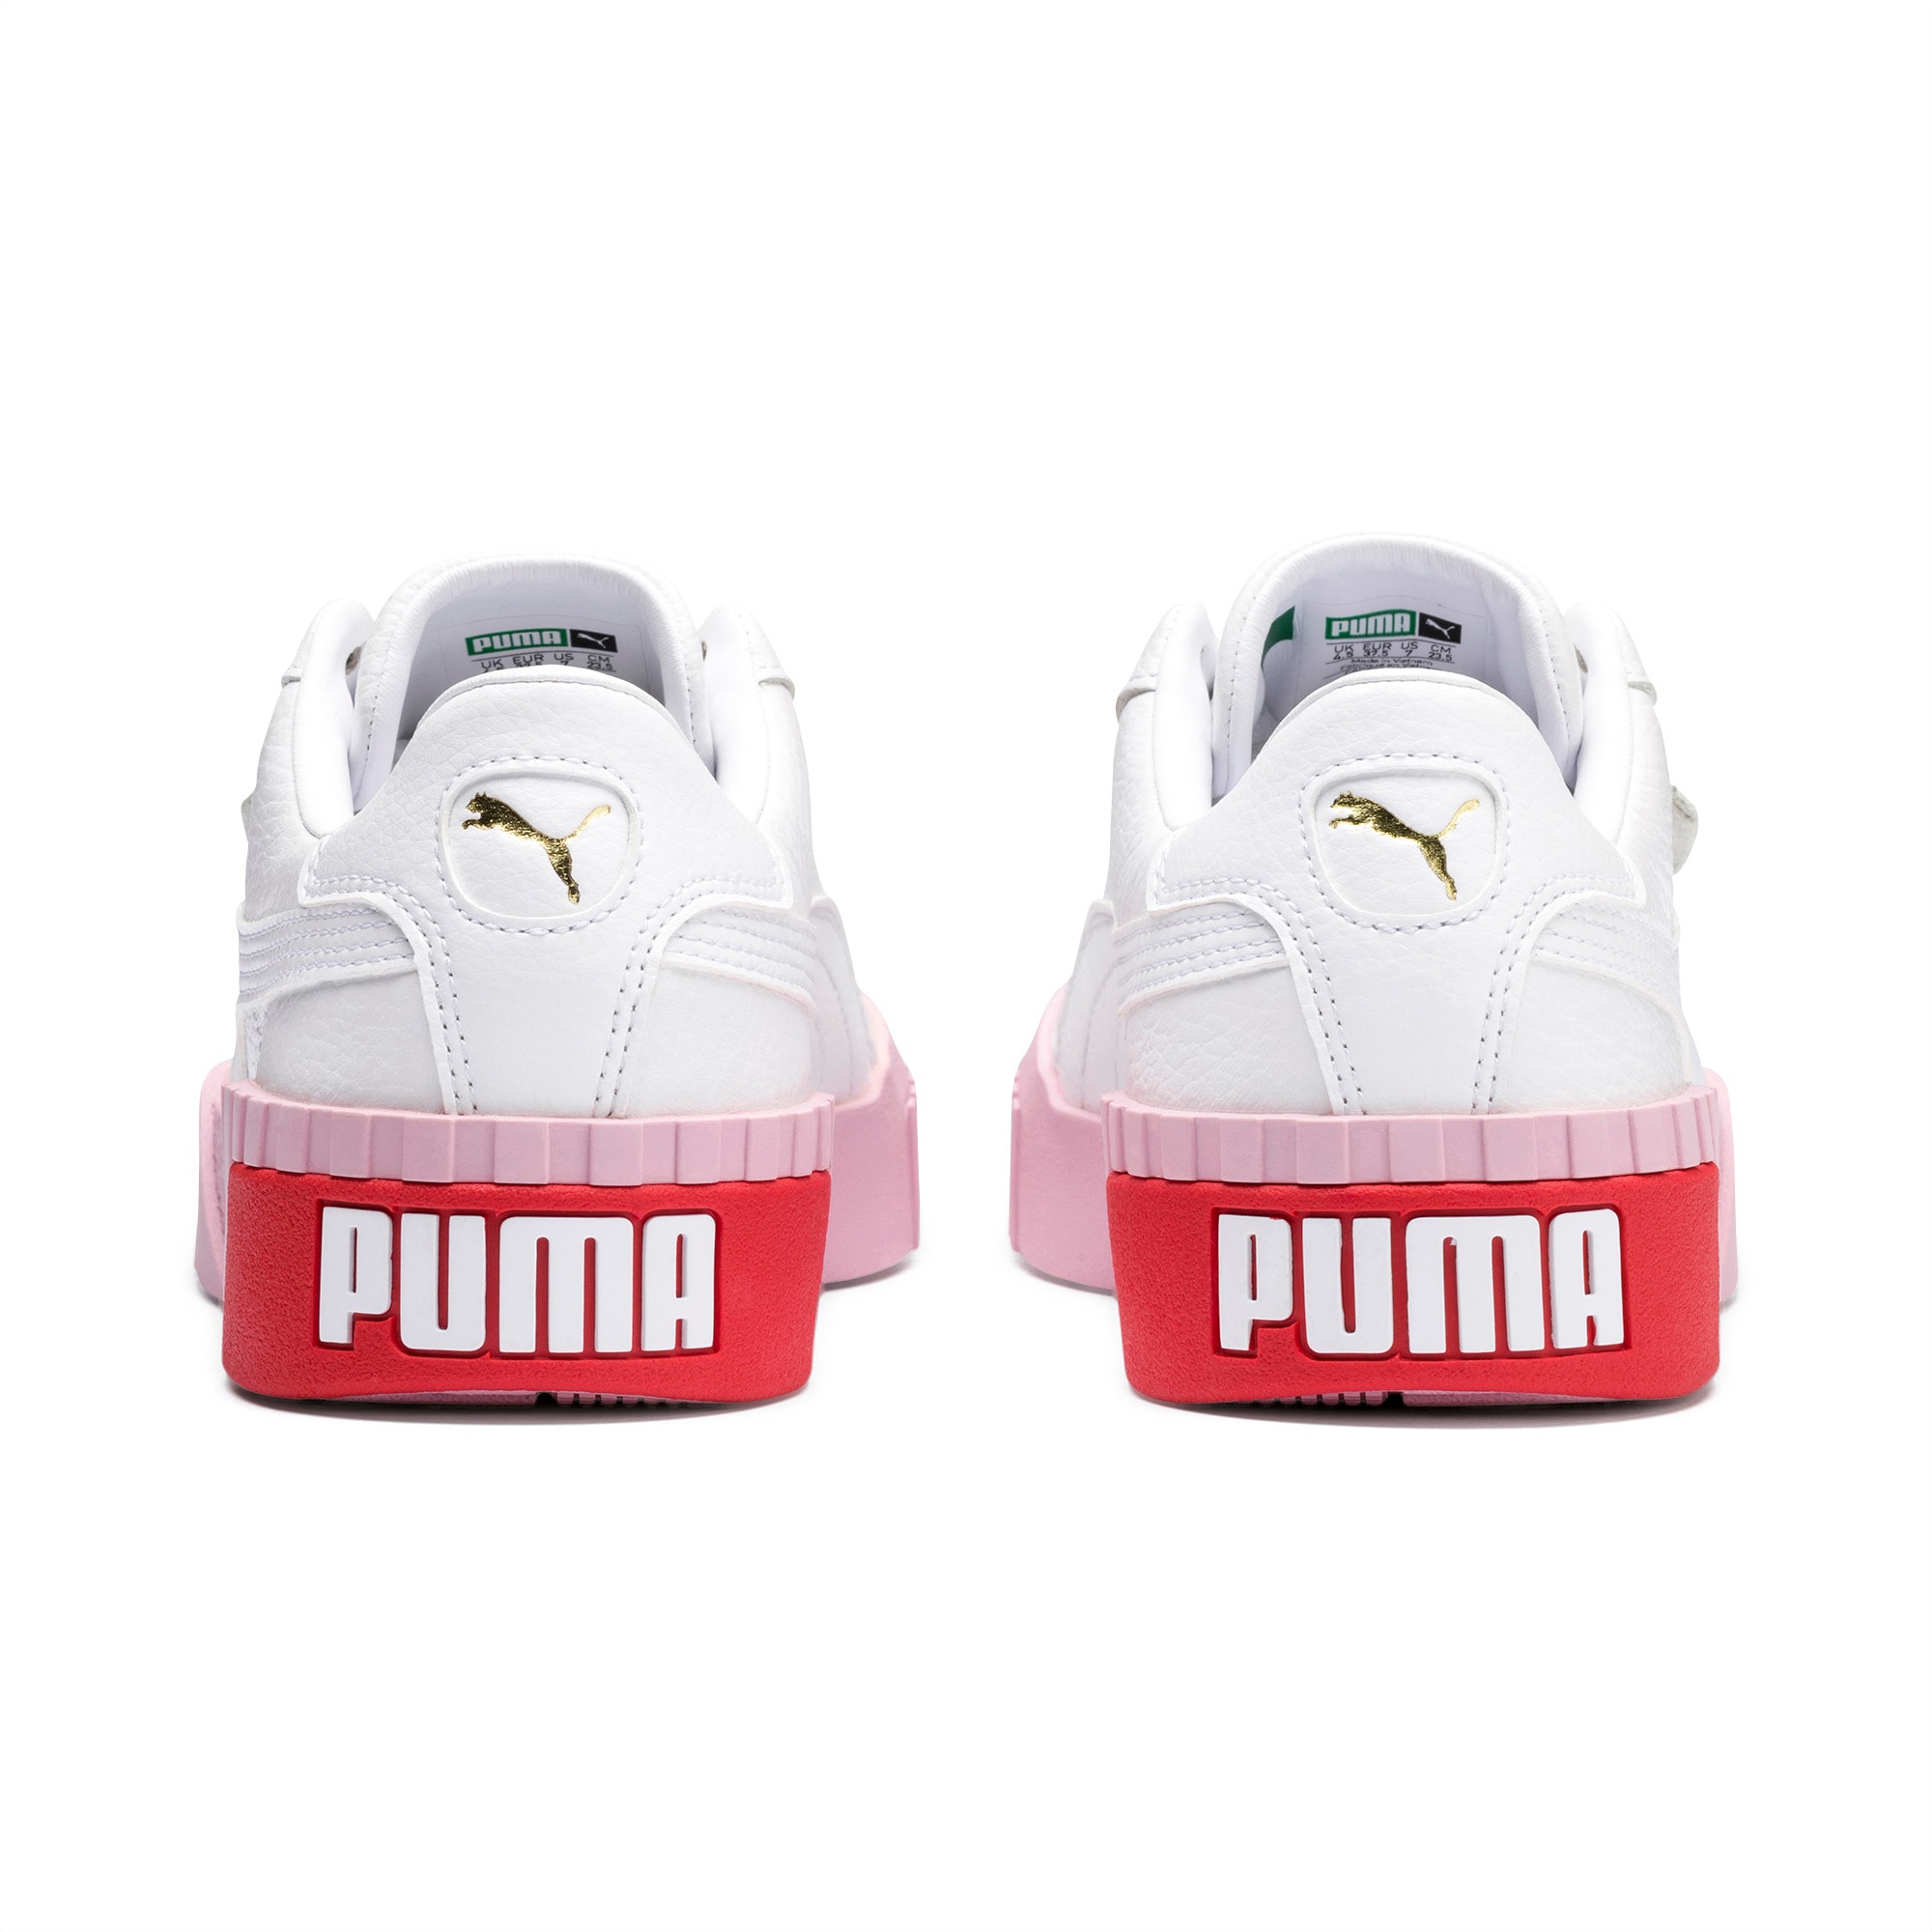 puma pink and white